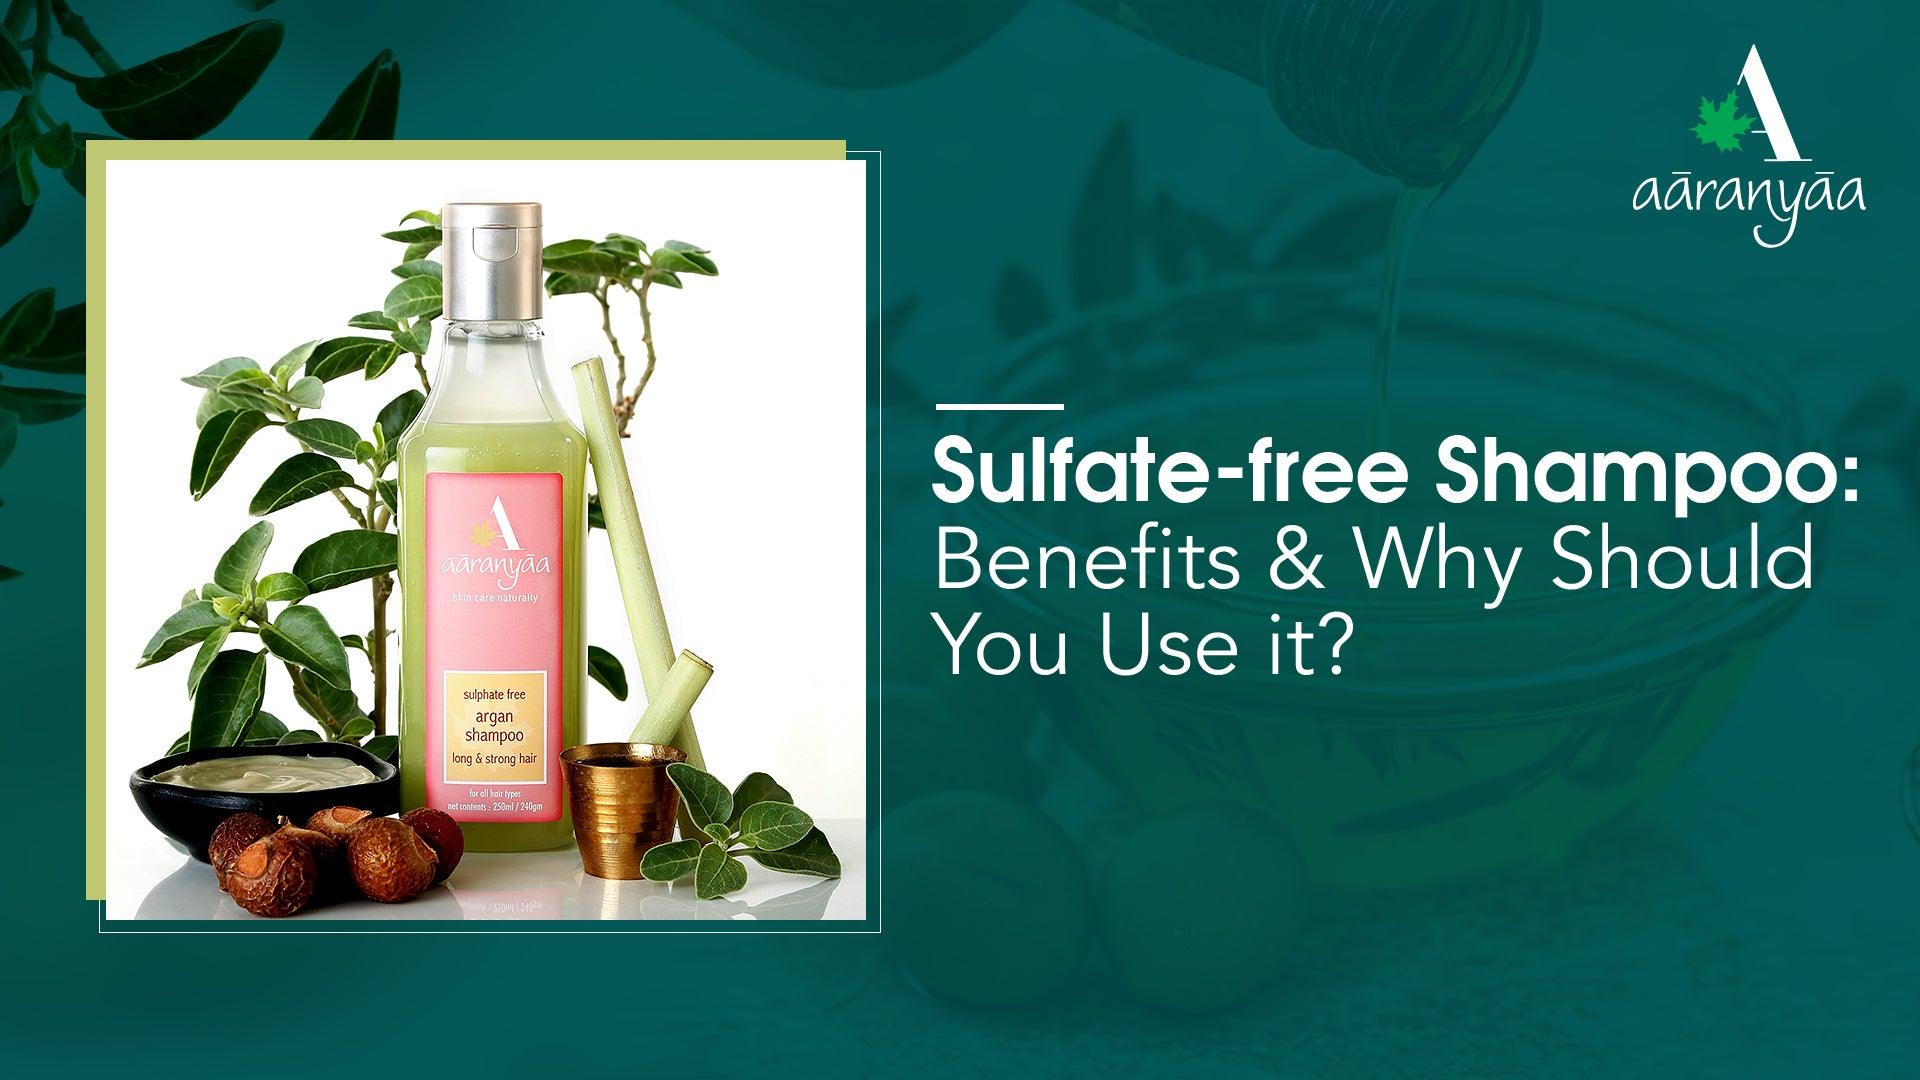 Sulfate-free Shampoo: Benefits & Why Should You Use it? - aaranyaa skincare